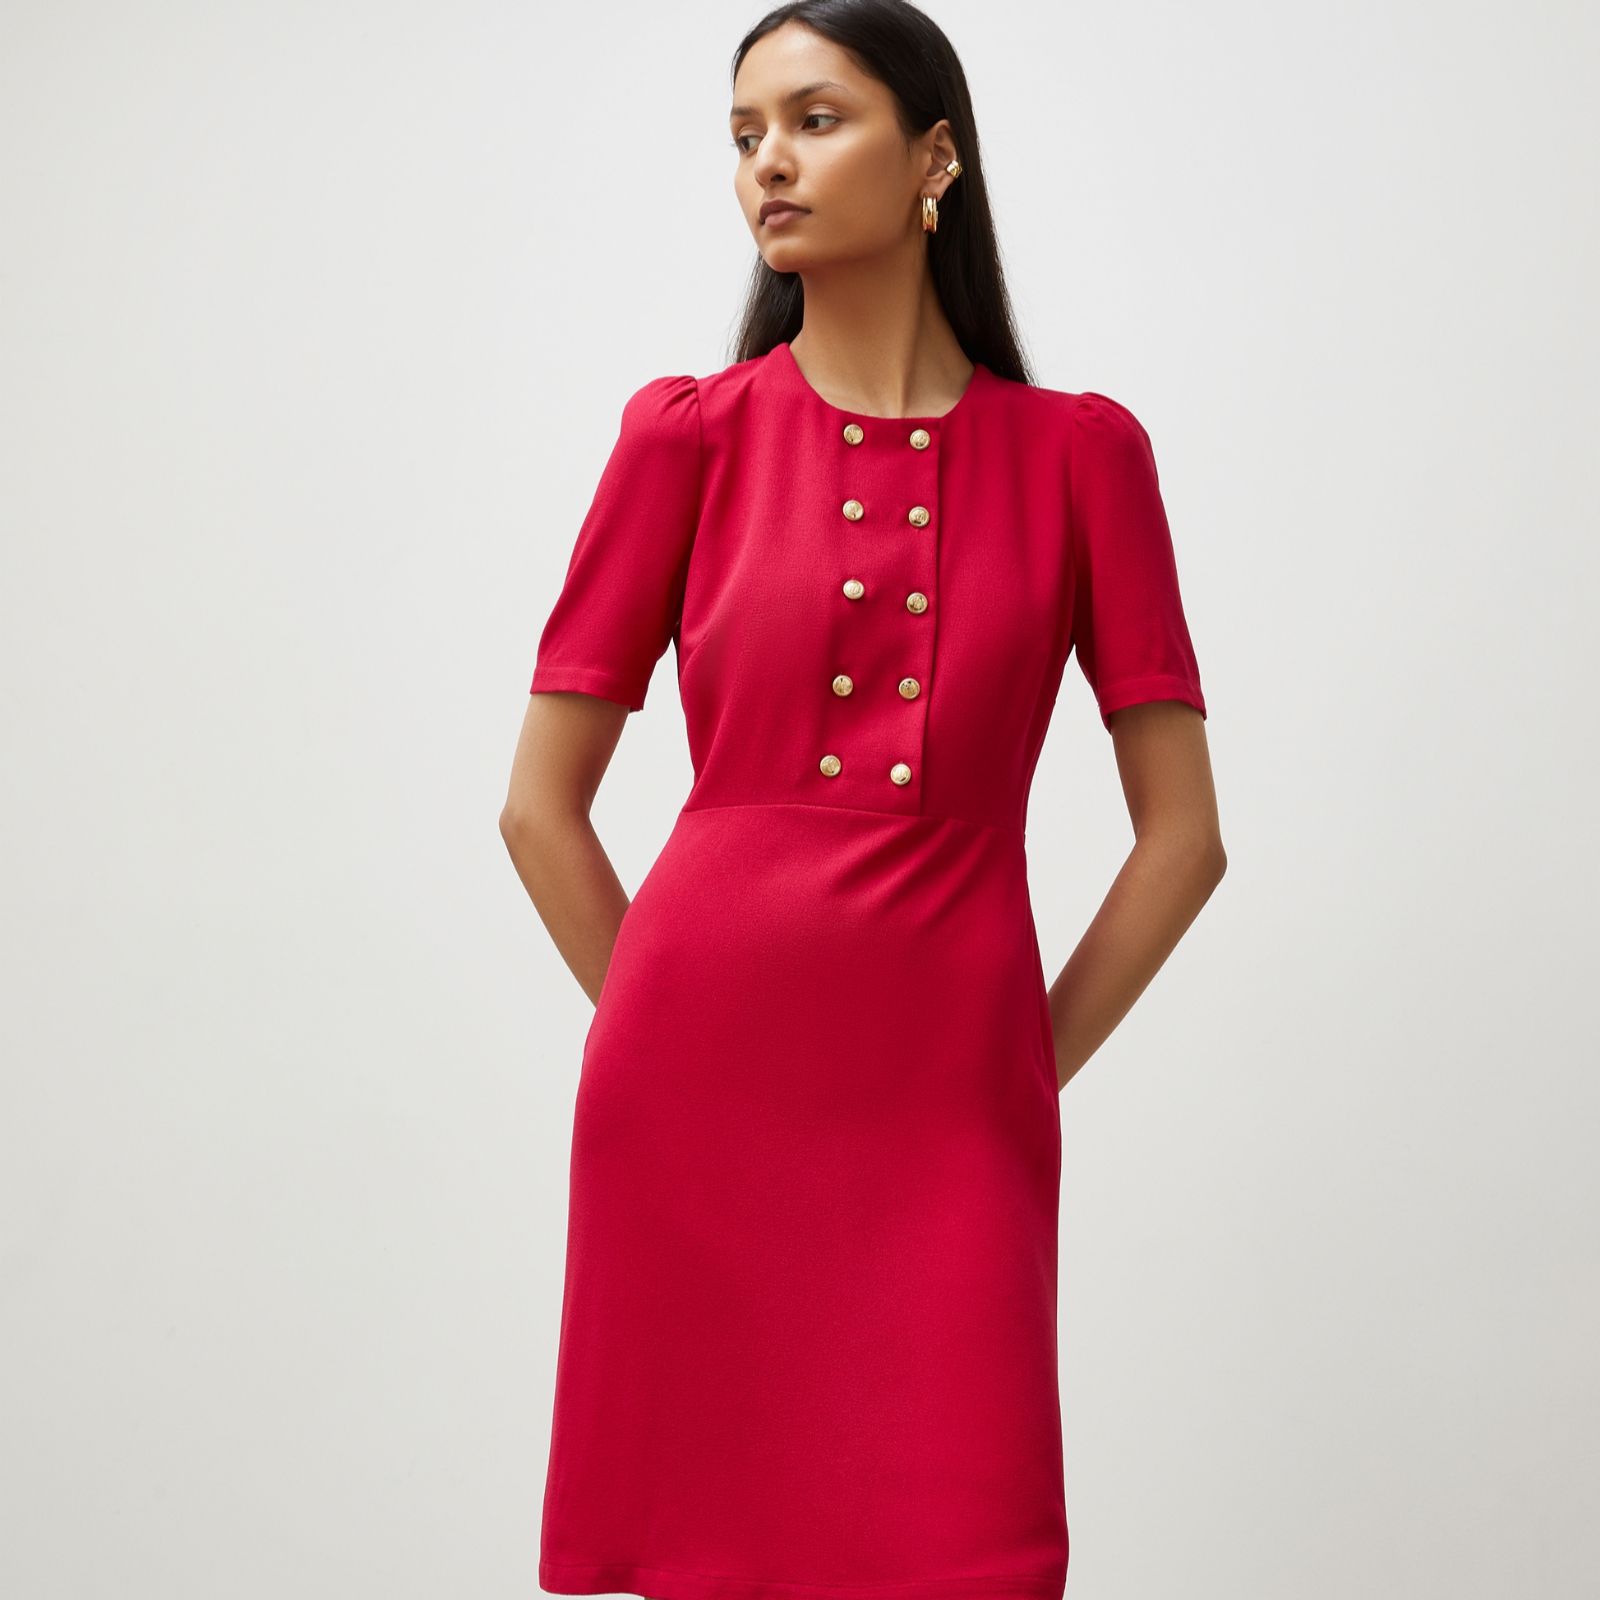 Finery Tasmin Ponte dress with Button Detail - QVC UK